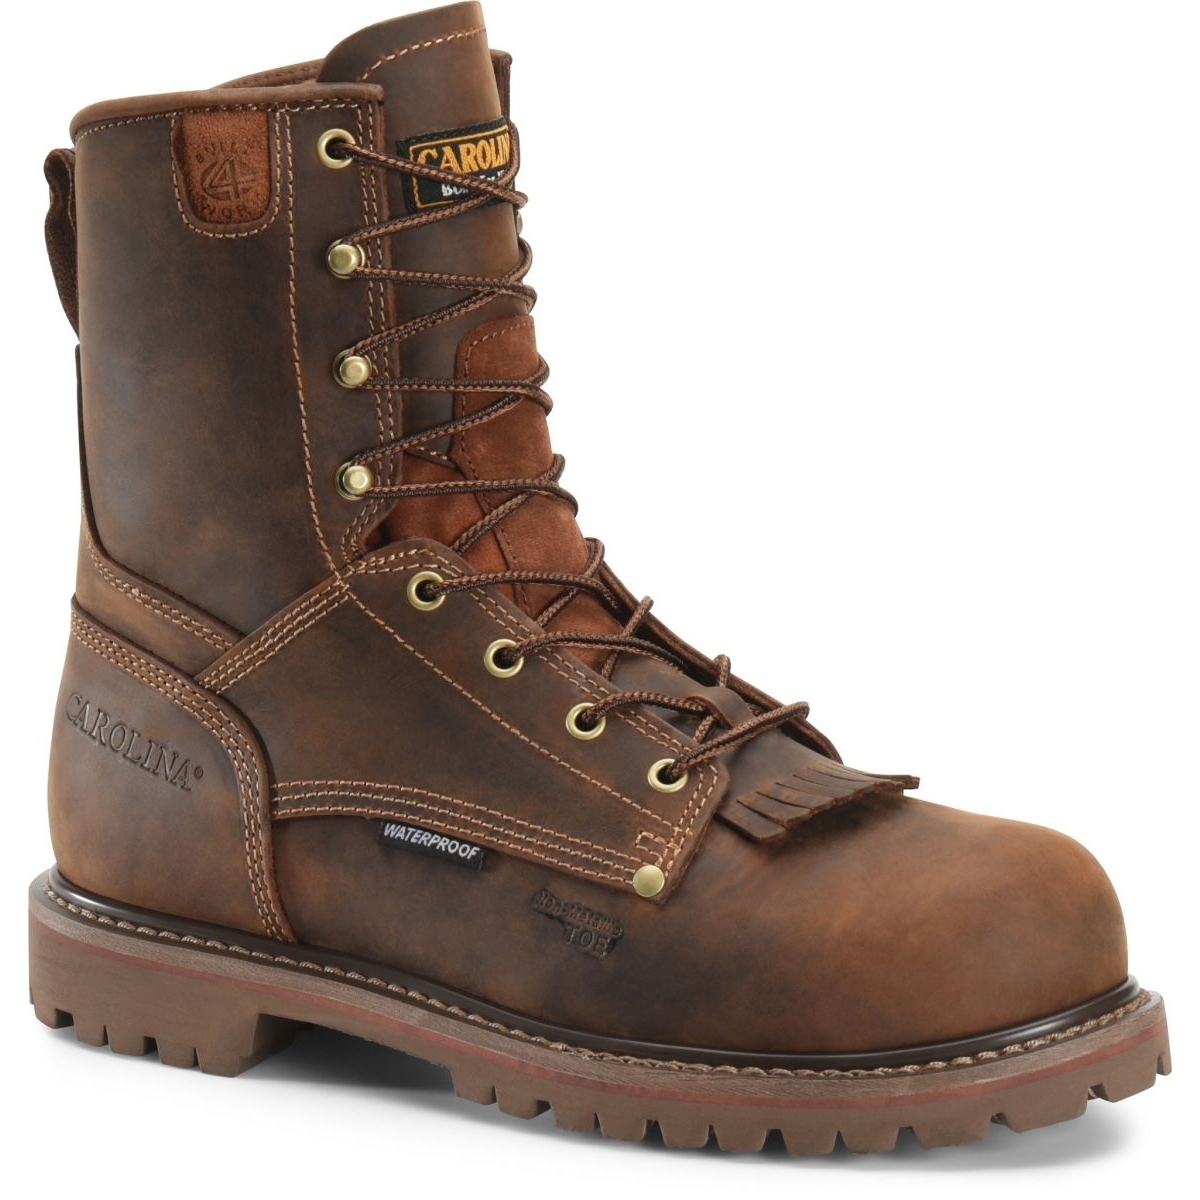 CAROLINA Men's 28 Series 8 Composite Toe Waterproof Work Boot Brown - CA8528 DARK BROWN - DARK BROWN, 14 WIDE